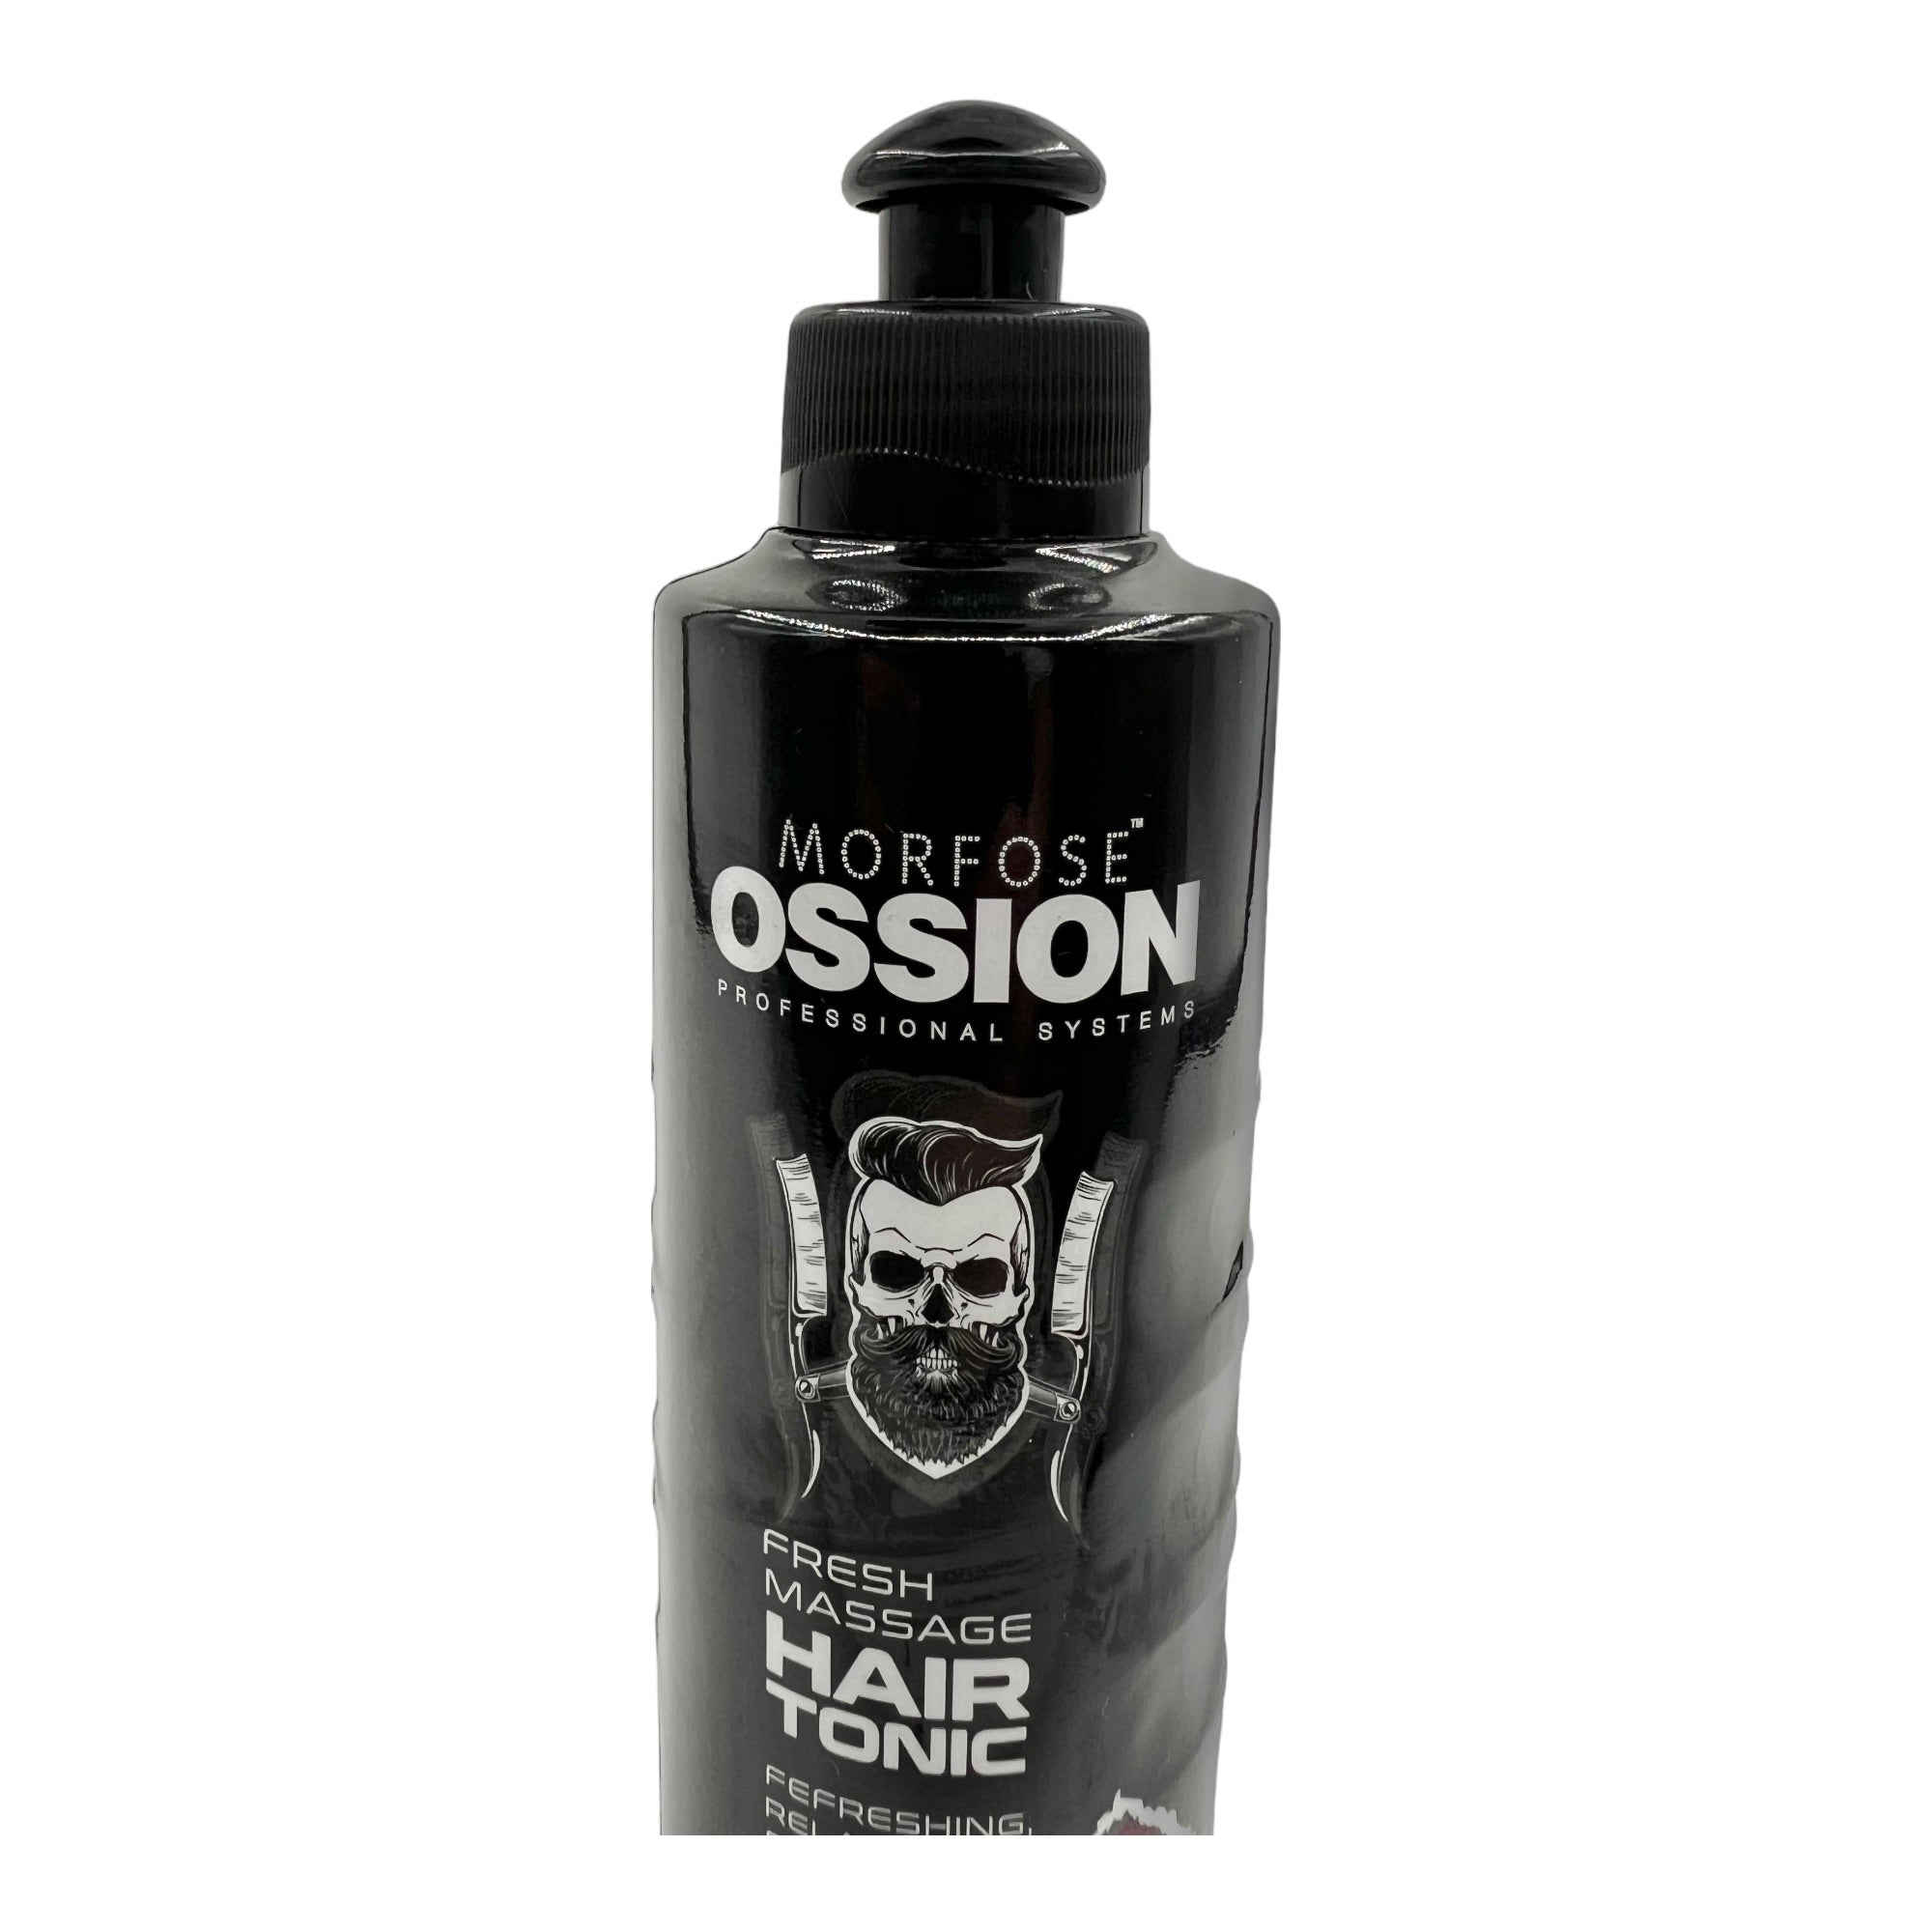 Morfose - Ossion Fresh Massage Hair Tonic 250ml